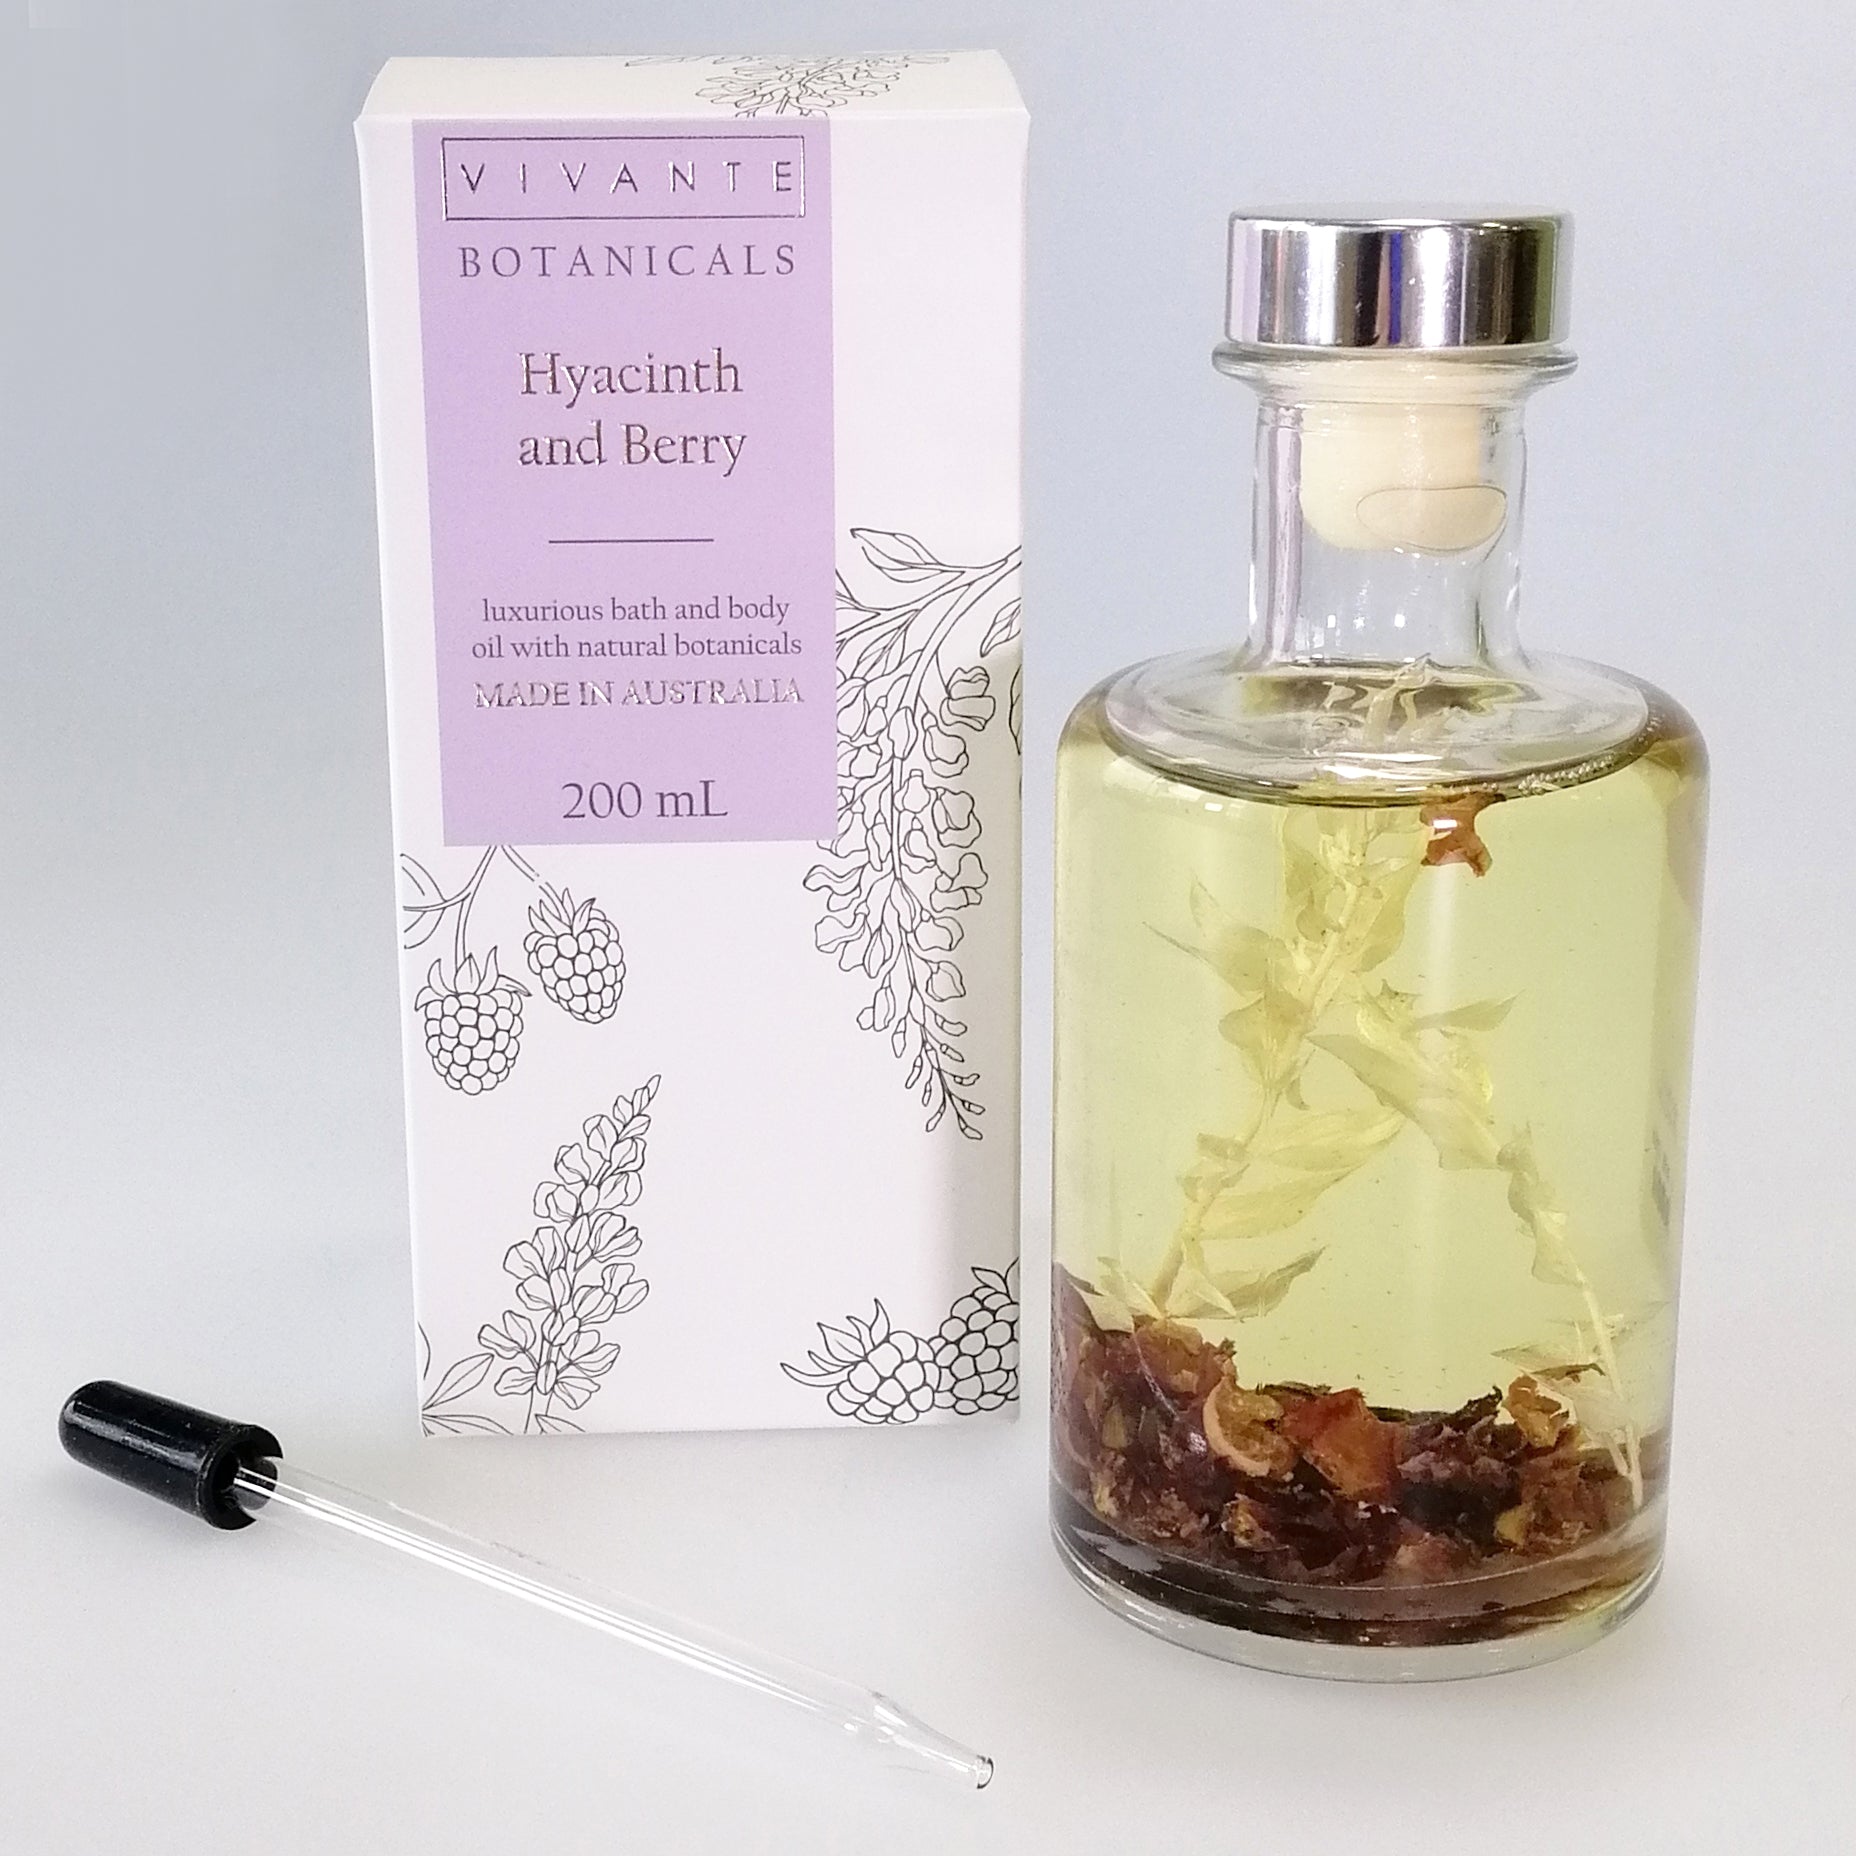 Vivante Botanicals - Bath & Body Oil - Hyacinth and Berry